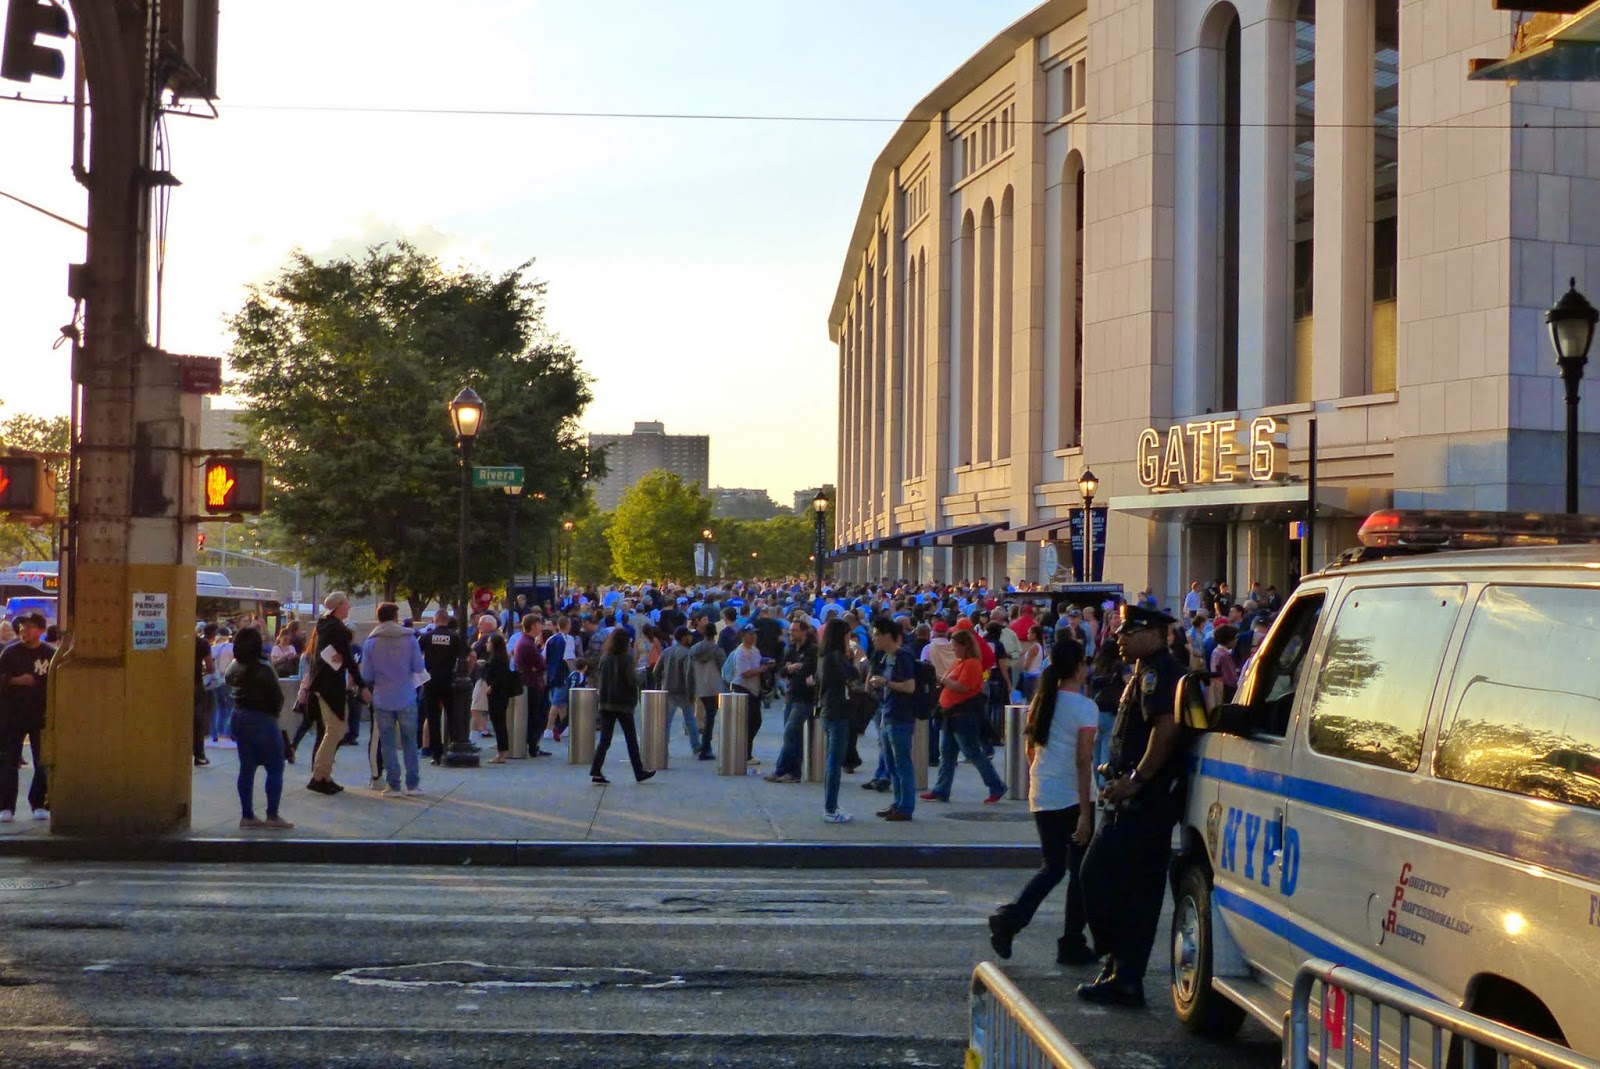 Photo of 161 St - Yankee Stadium in New York City, New York, United States - 8 Picture of Point of interest, Establishment, Transit station, Subway station